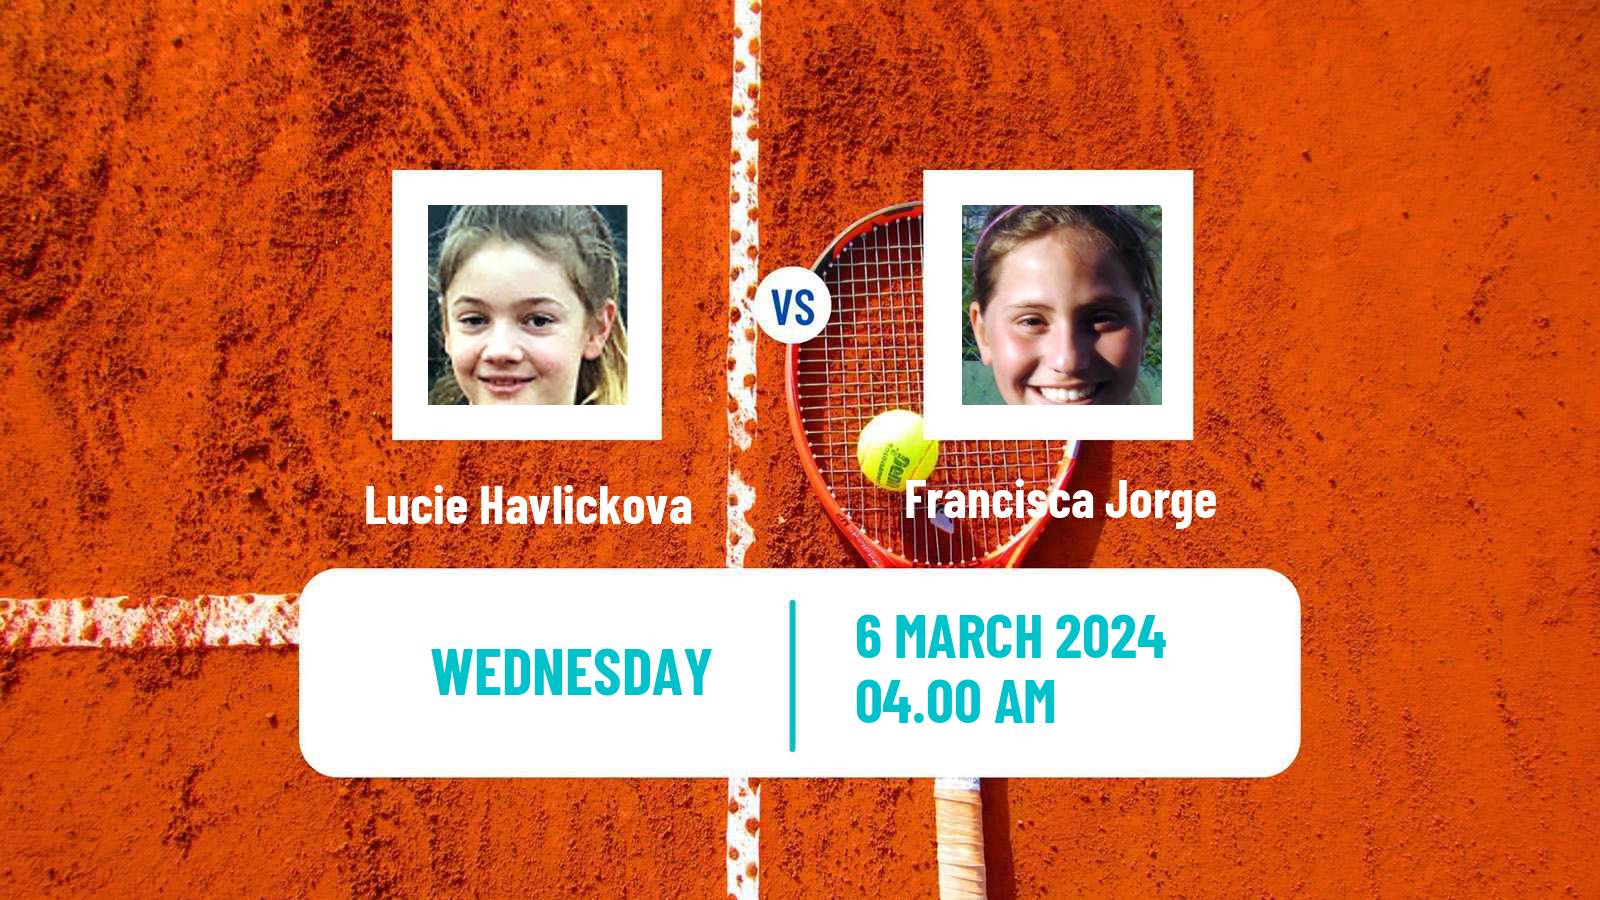 Tennis ITF W75 Trnava Women Lucie Havlickova - Francisca Jorge